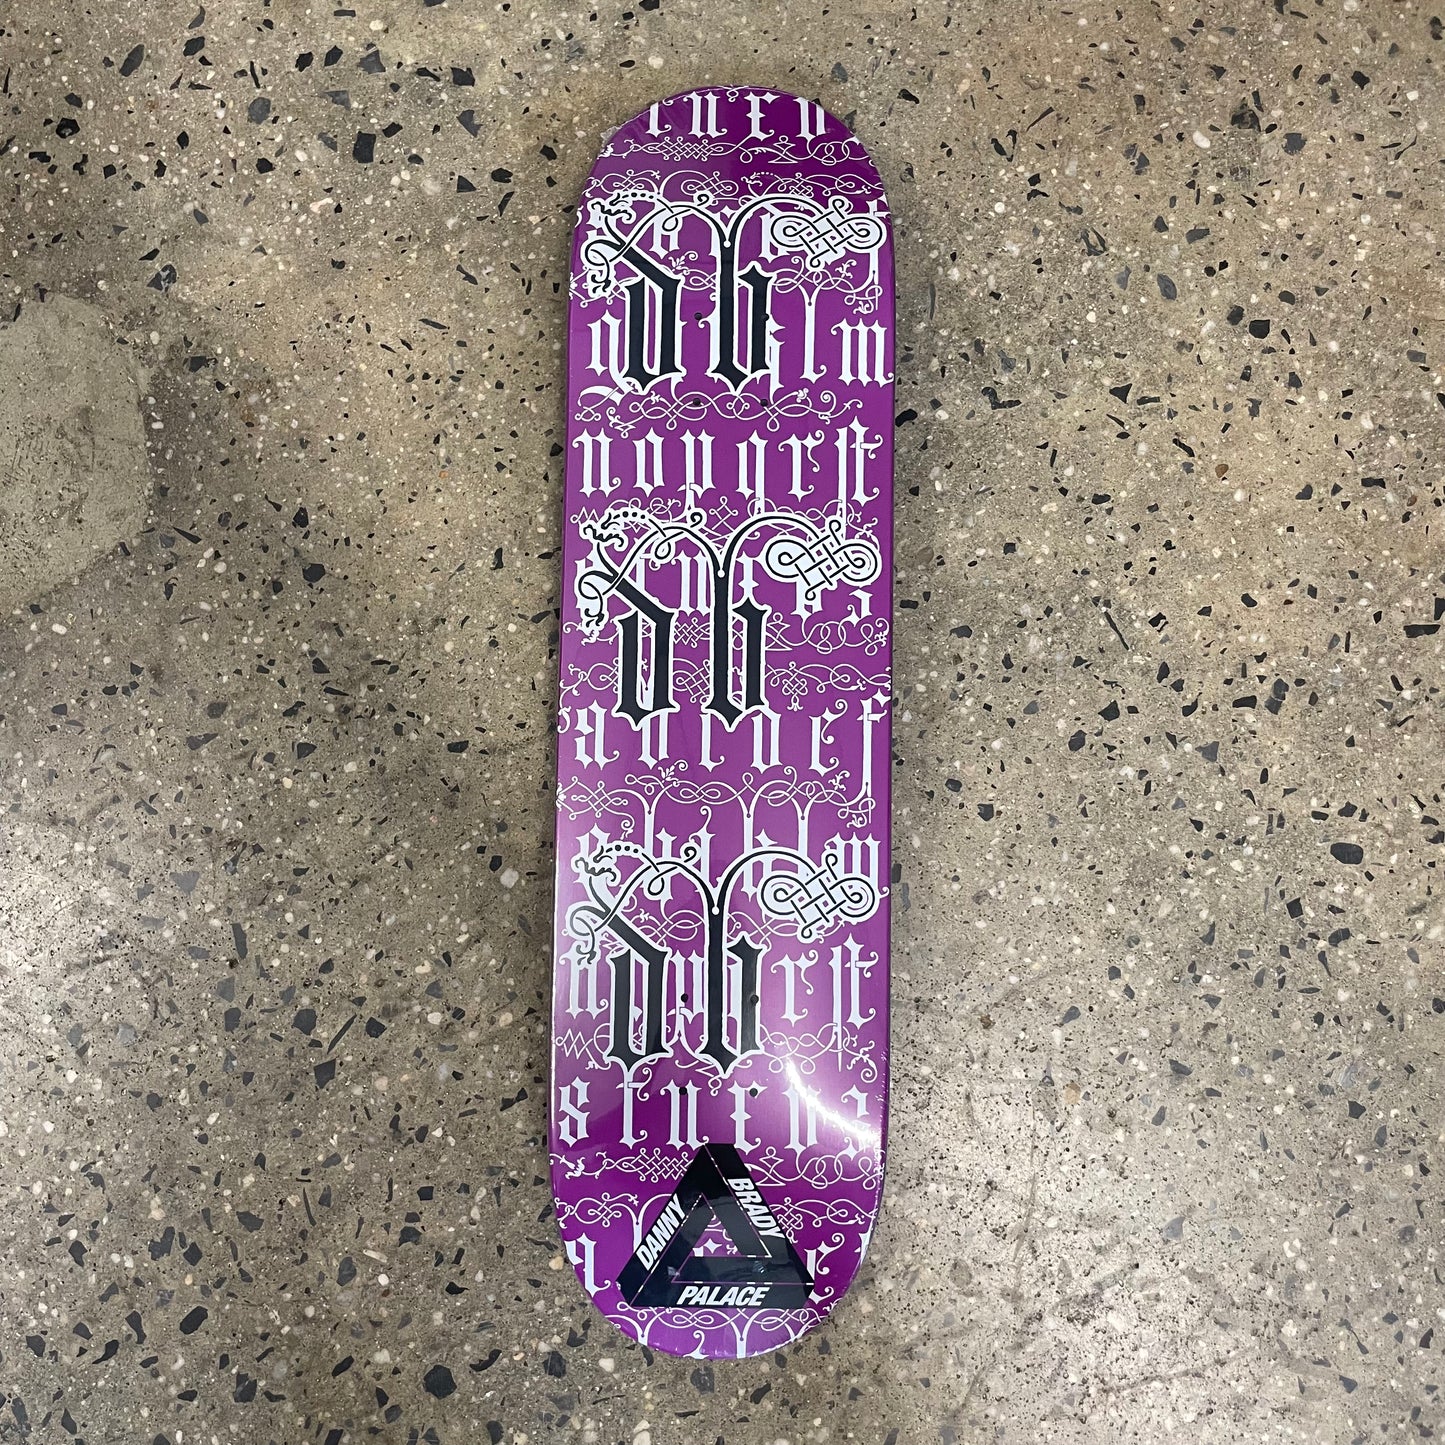 black and white design on purple skate deck